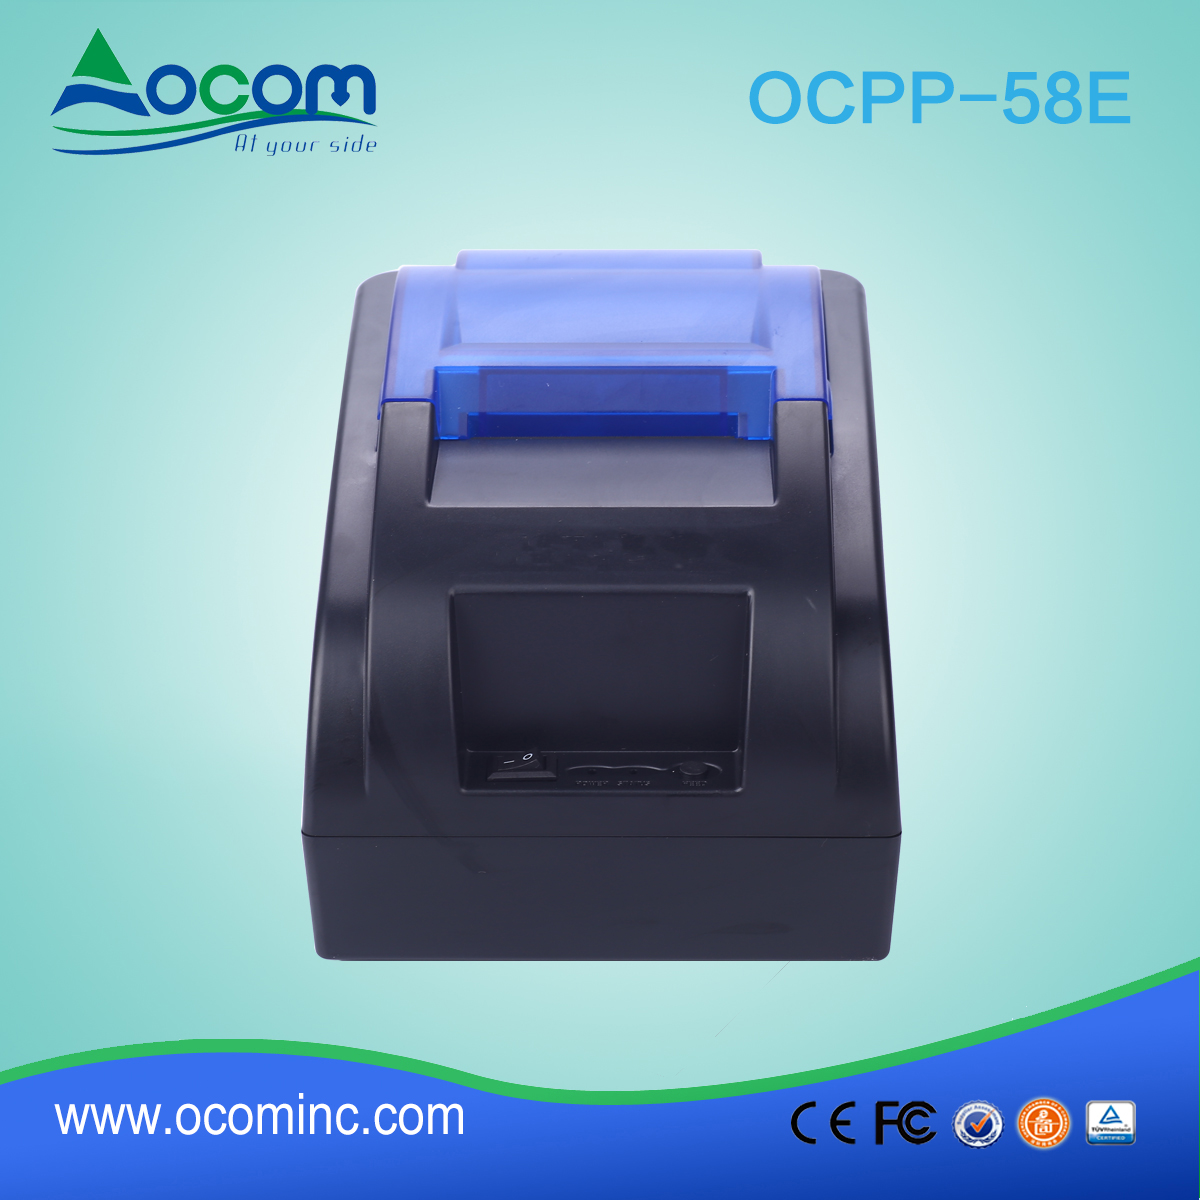 OCPP-58E - Μικρός φτηνός εκτυπωτής παραλαβής POS των 58 mm